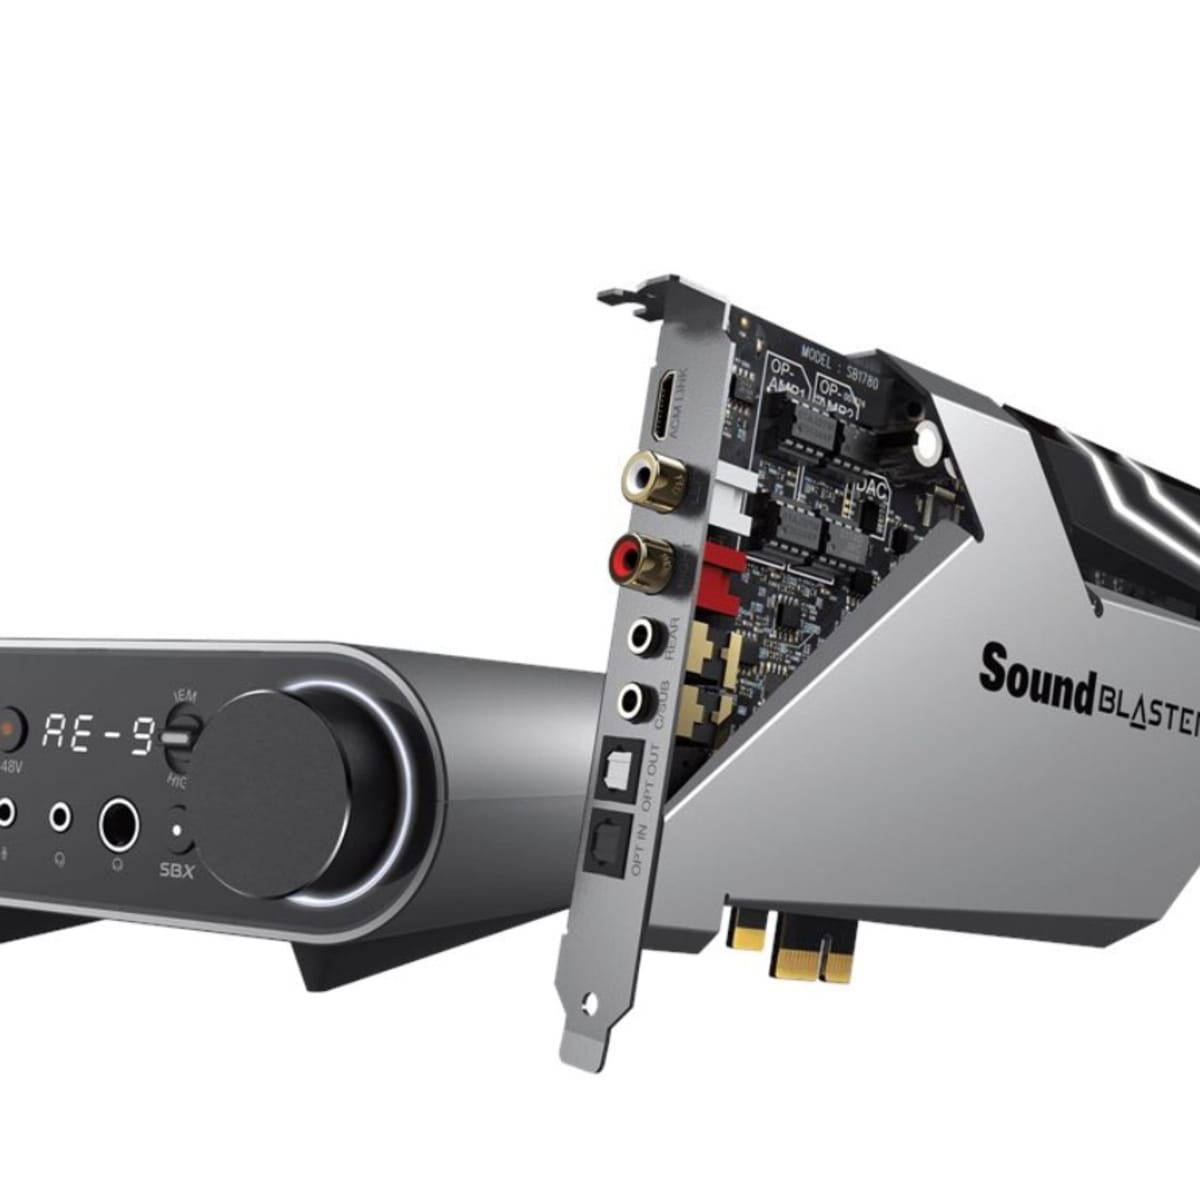 Creative Labs' Sound Blaster AE-9 and Sound BlasterX G6 Push PC